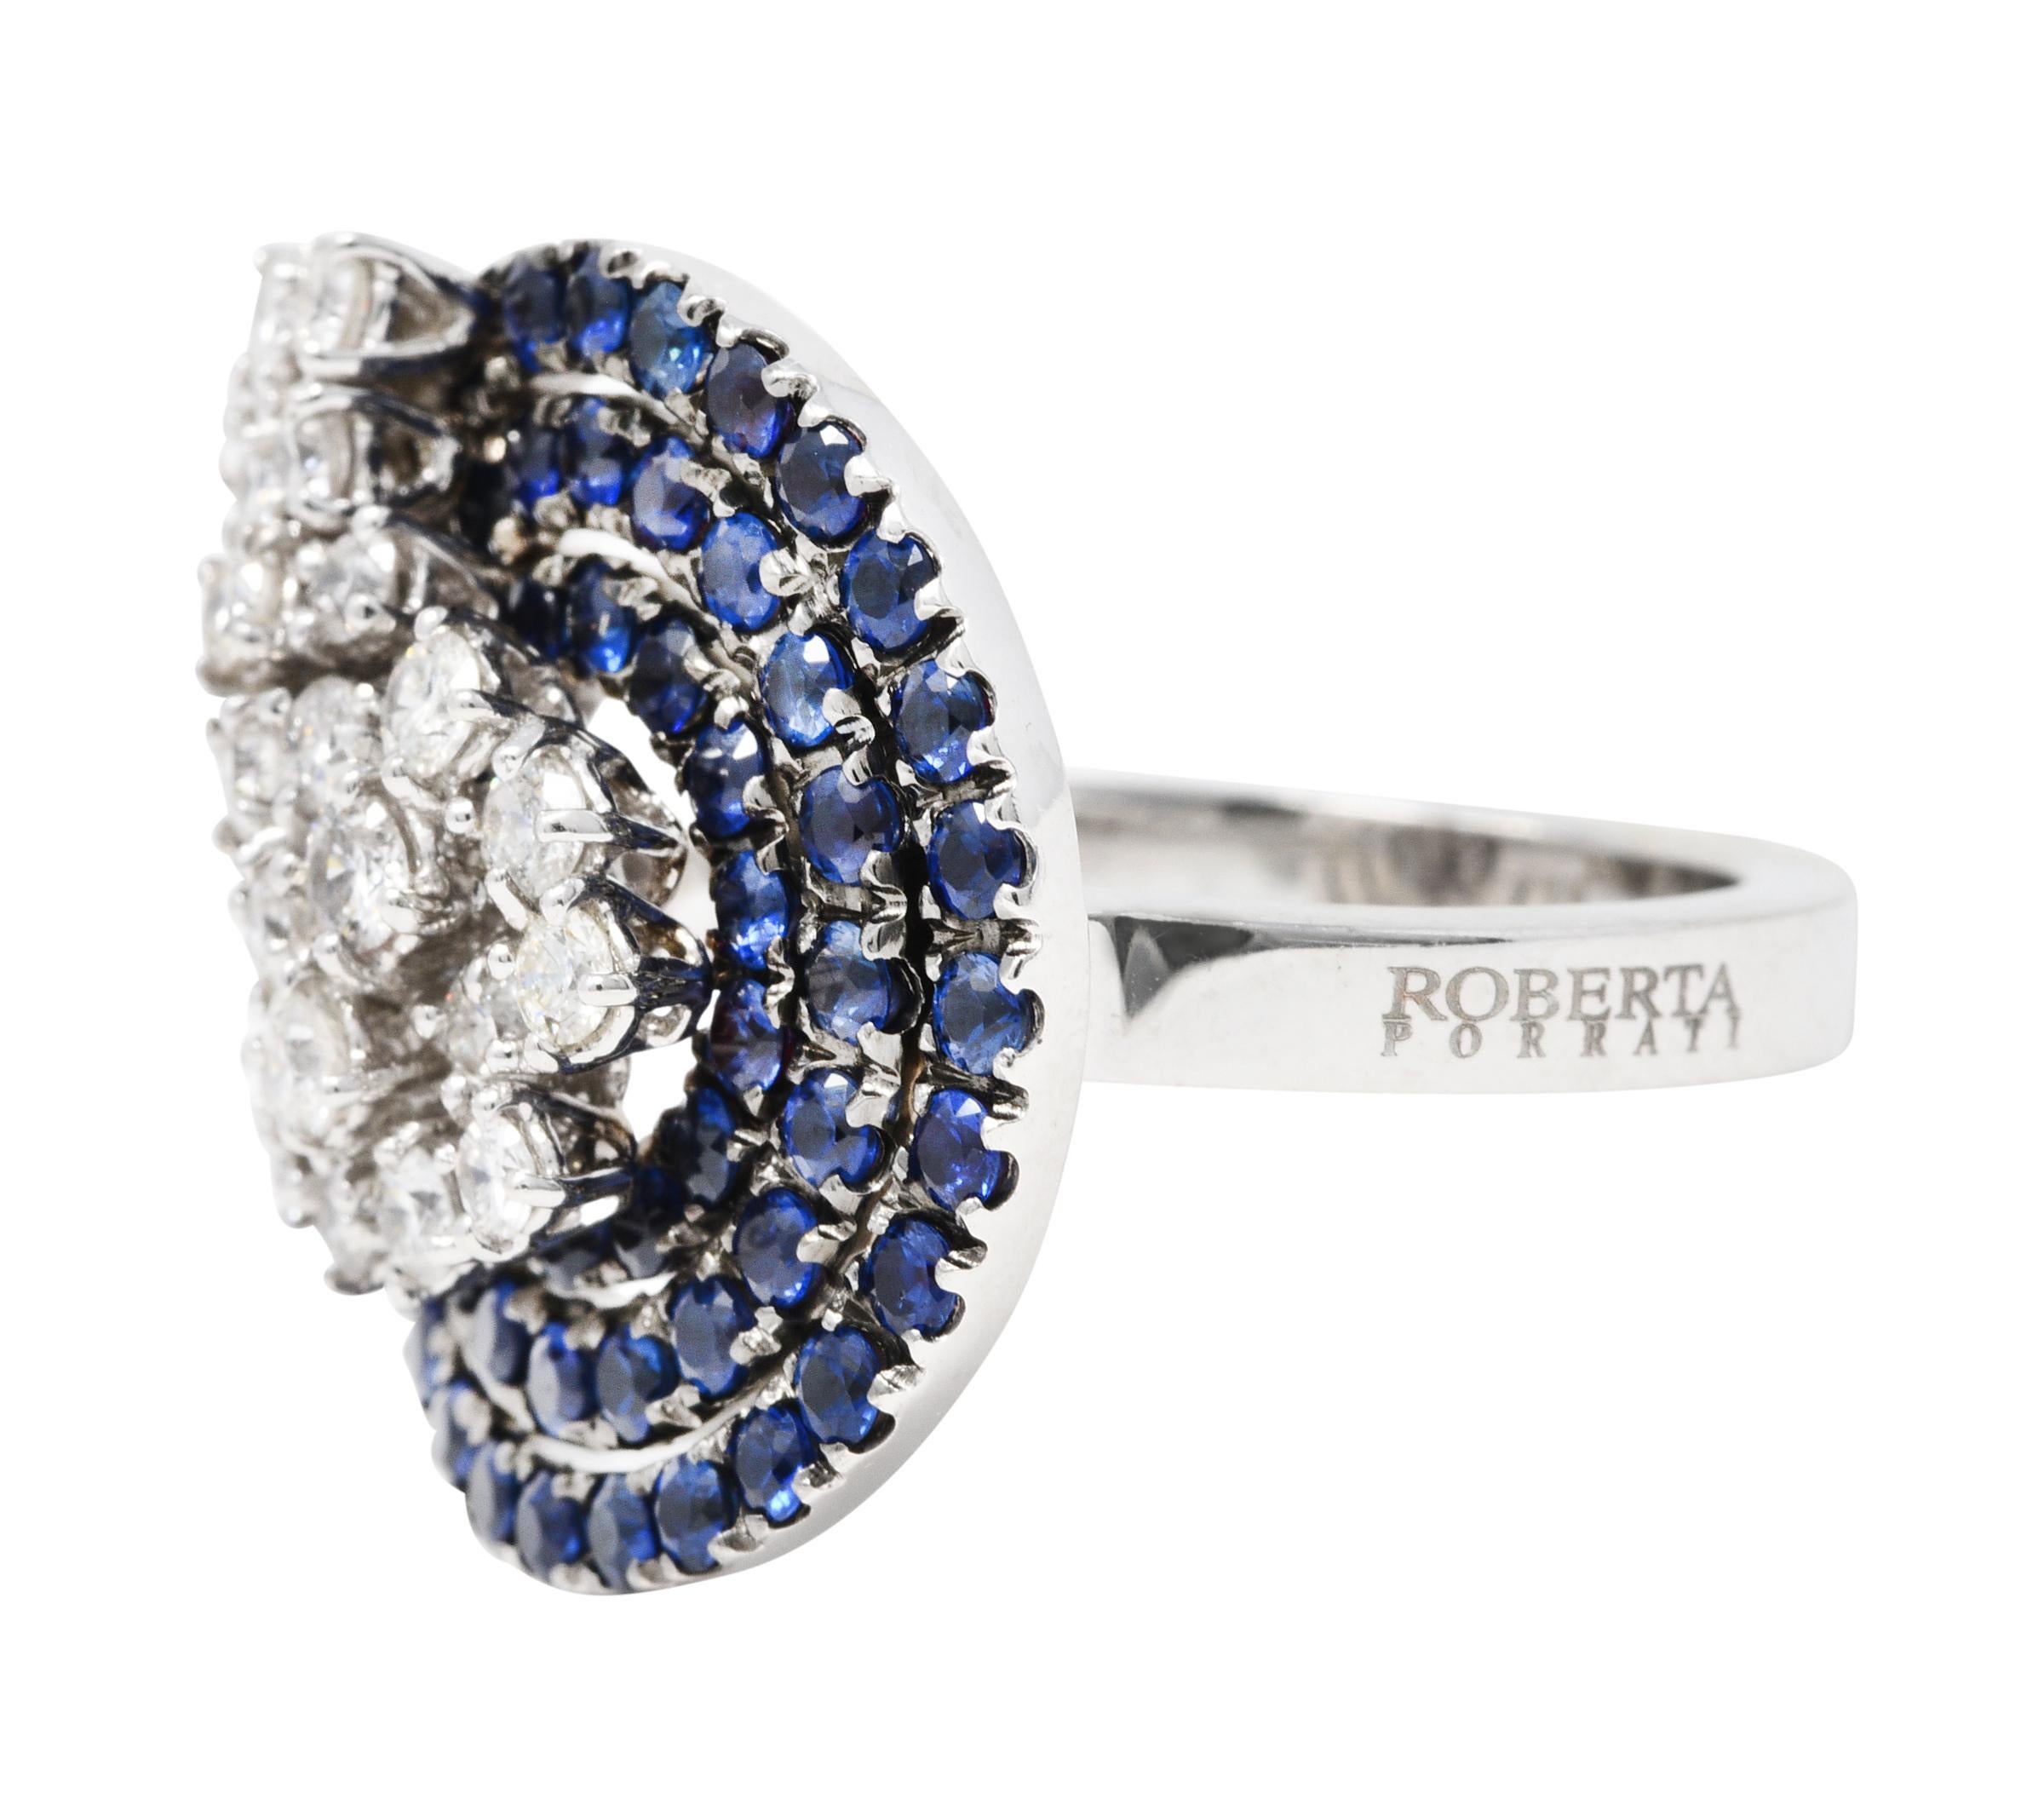 Women's or Men's Roberta Porrati 3.10 Carats Diamond Sapphire 18 Karat White Gold Ring